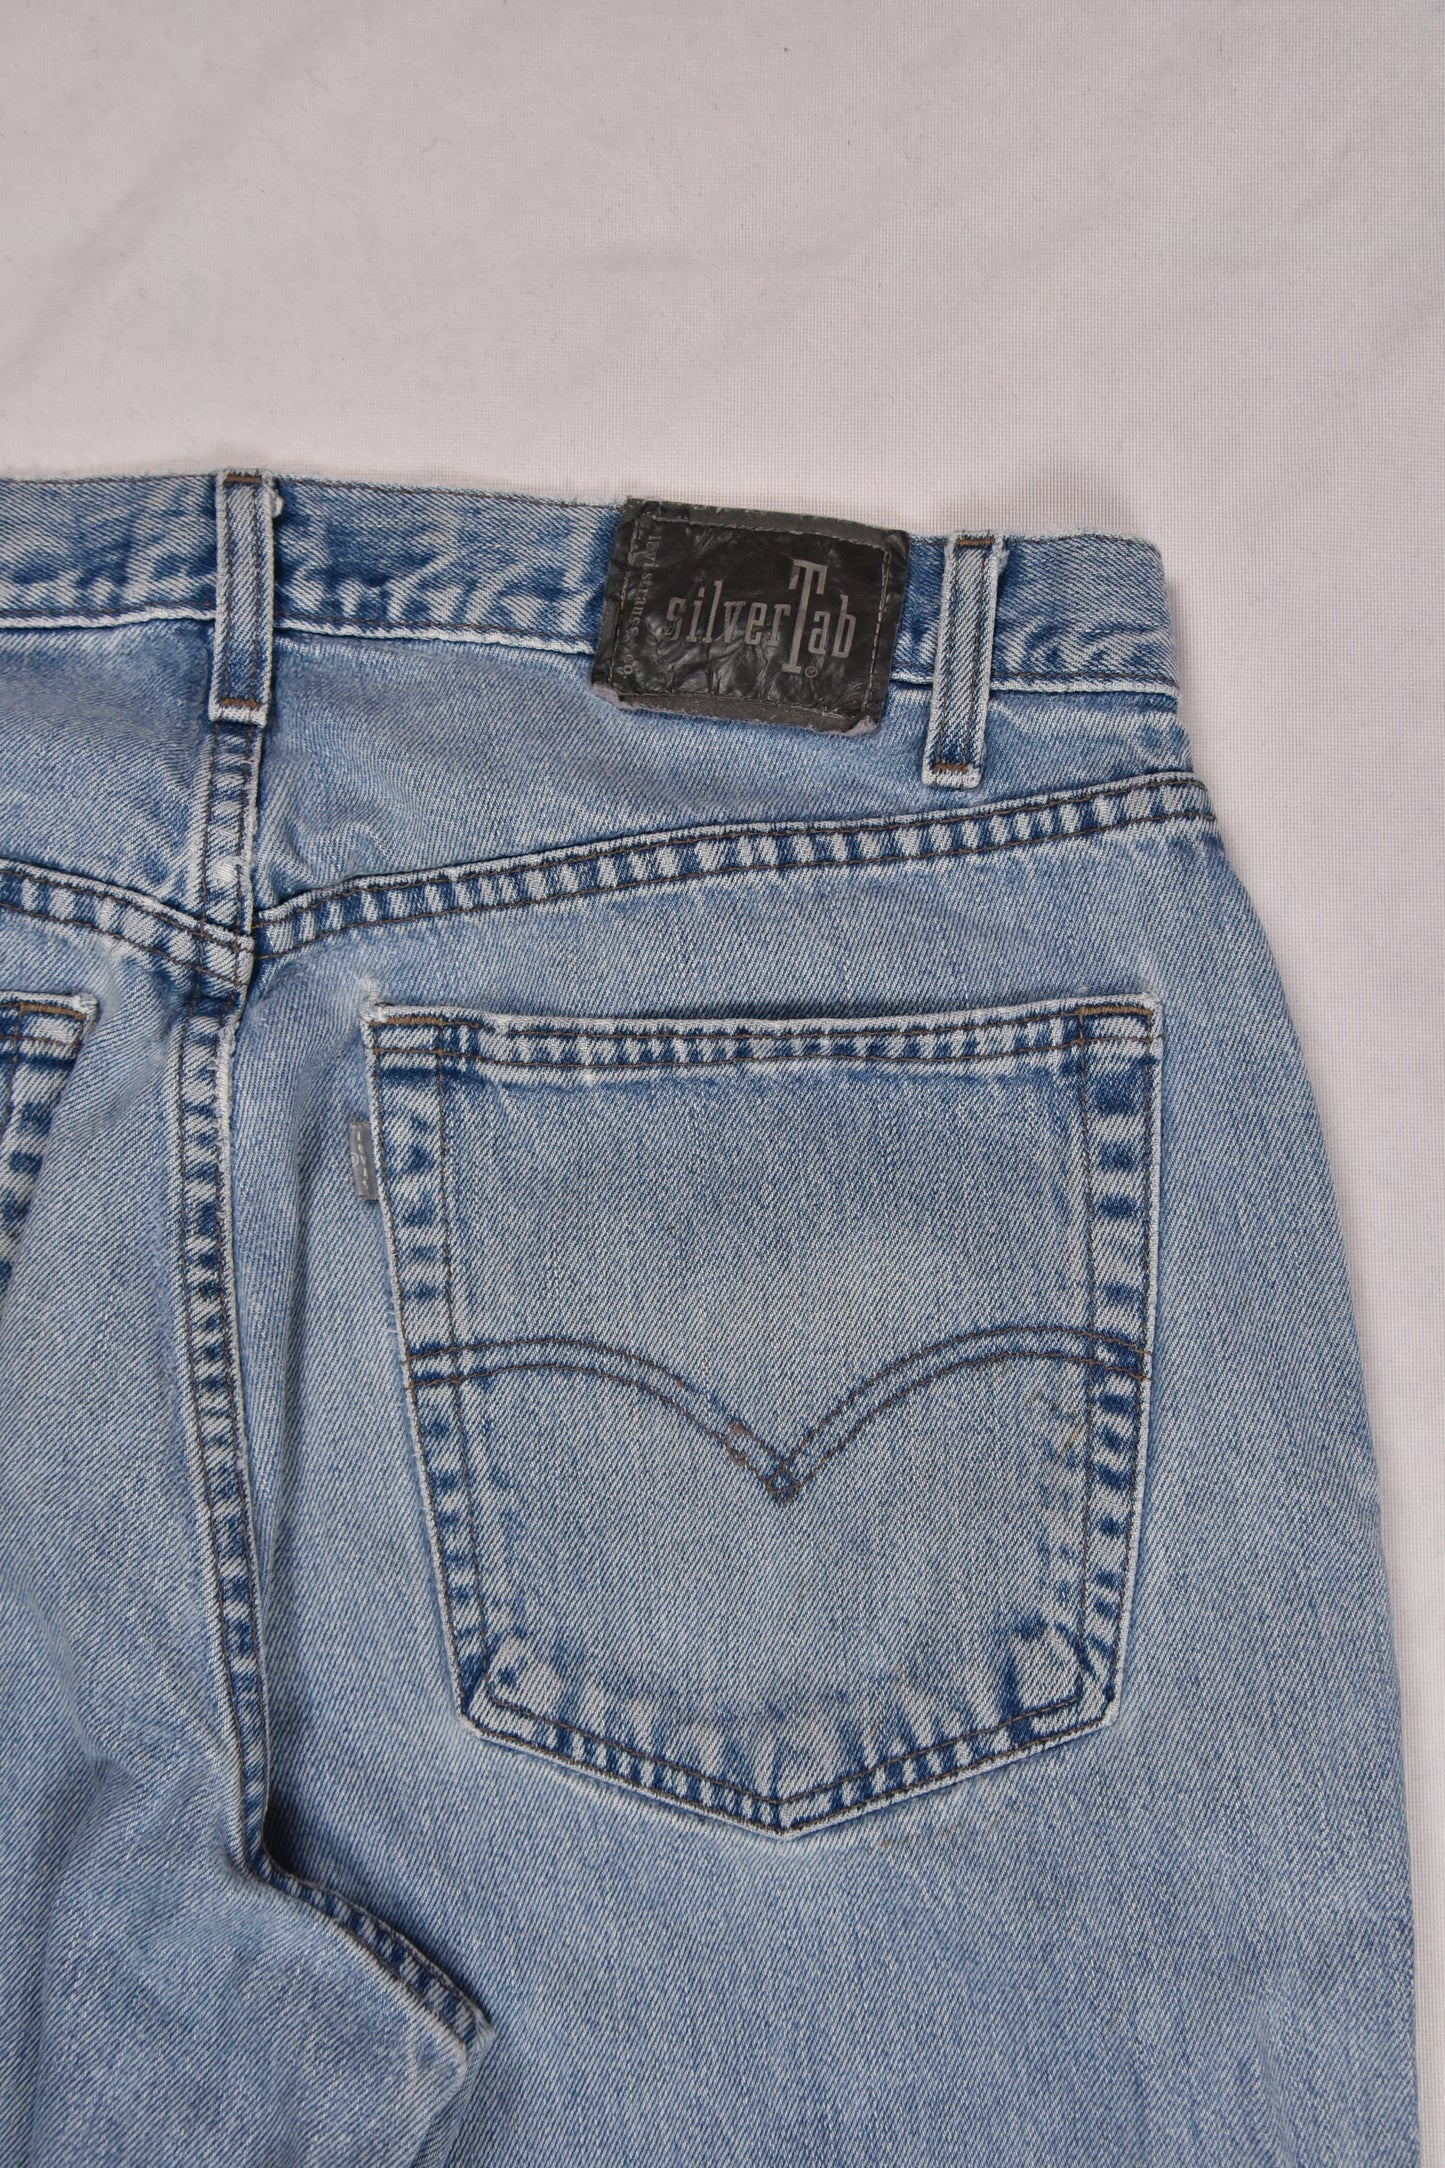 Jeans Levi's Silver Tab Vintage / 36x32